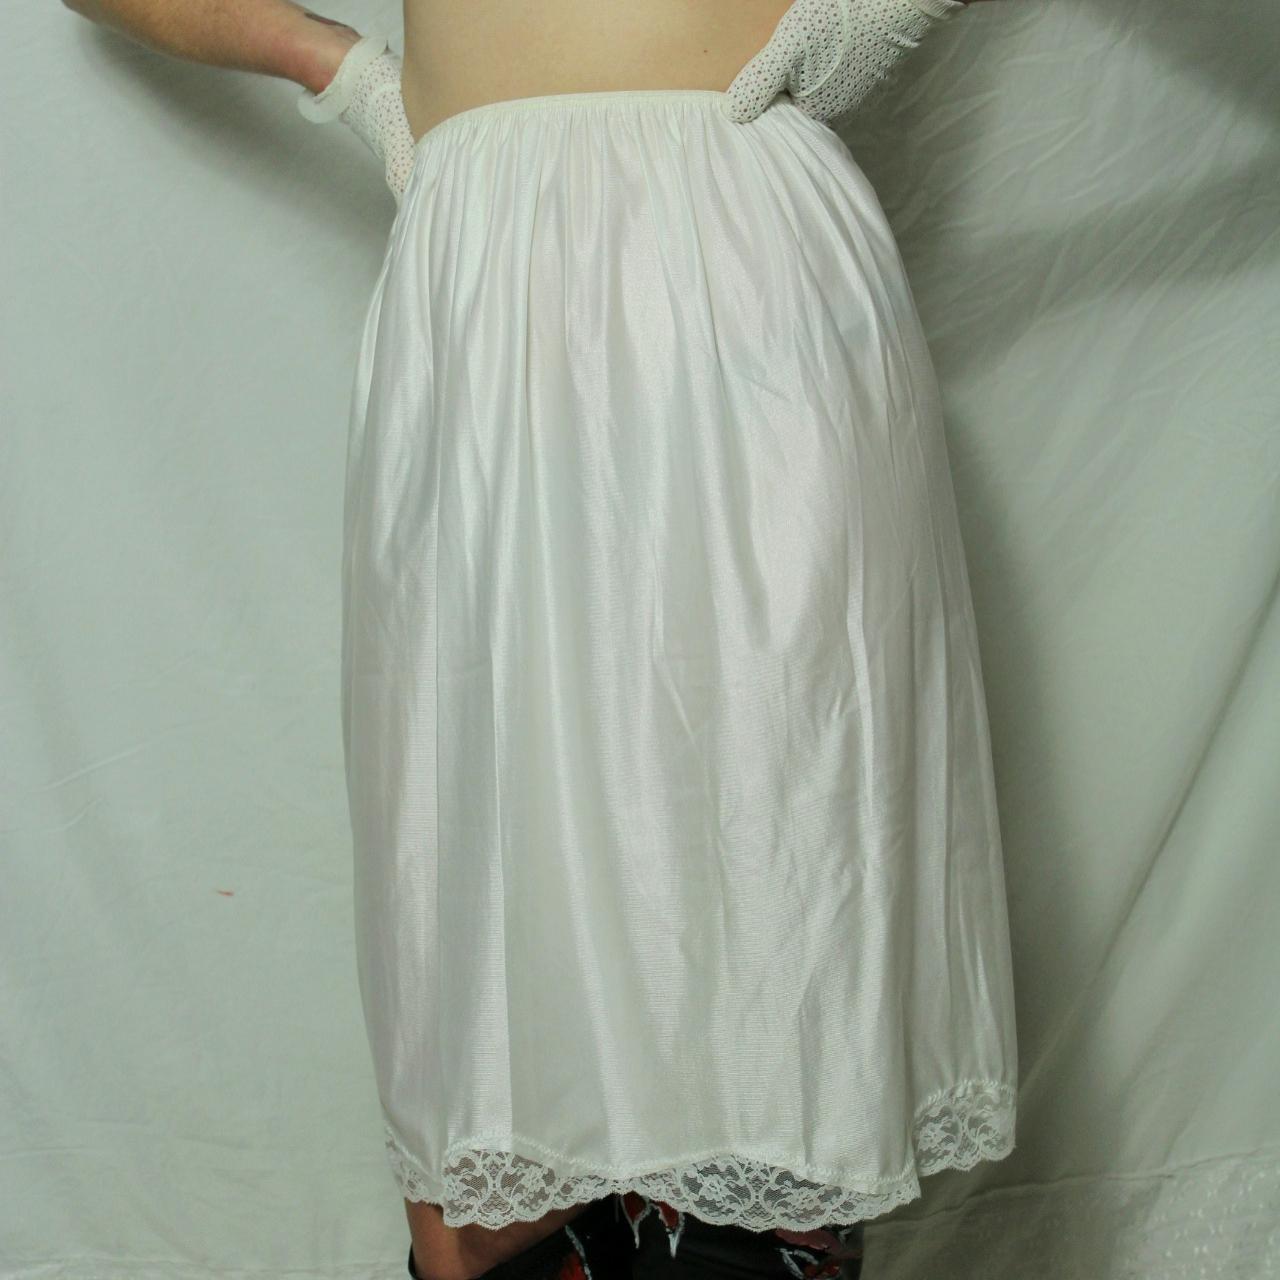 Product Image 4 - Vintage White Lace Slip Skirt.

Vintage